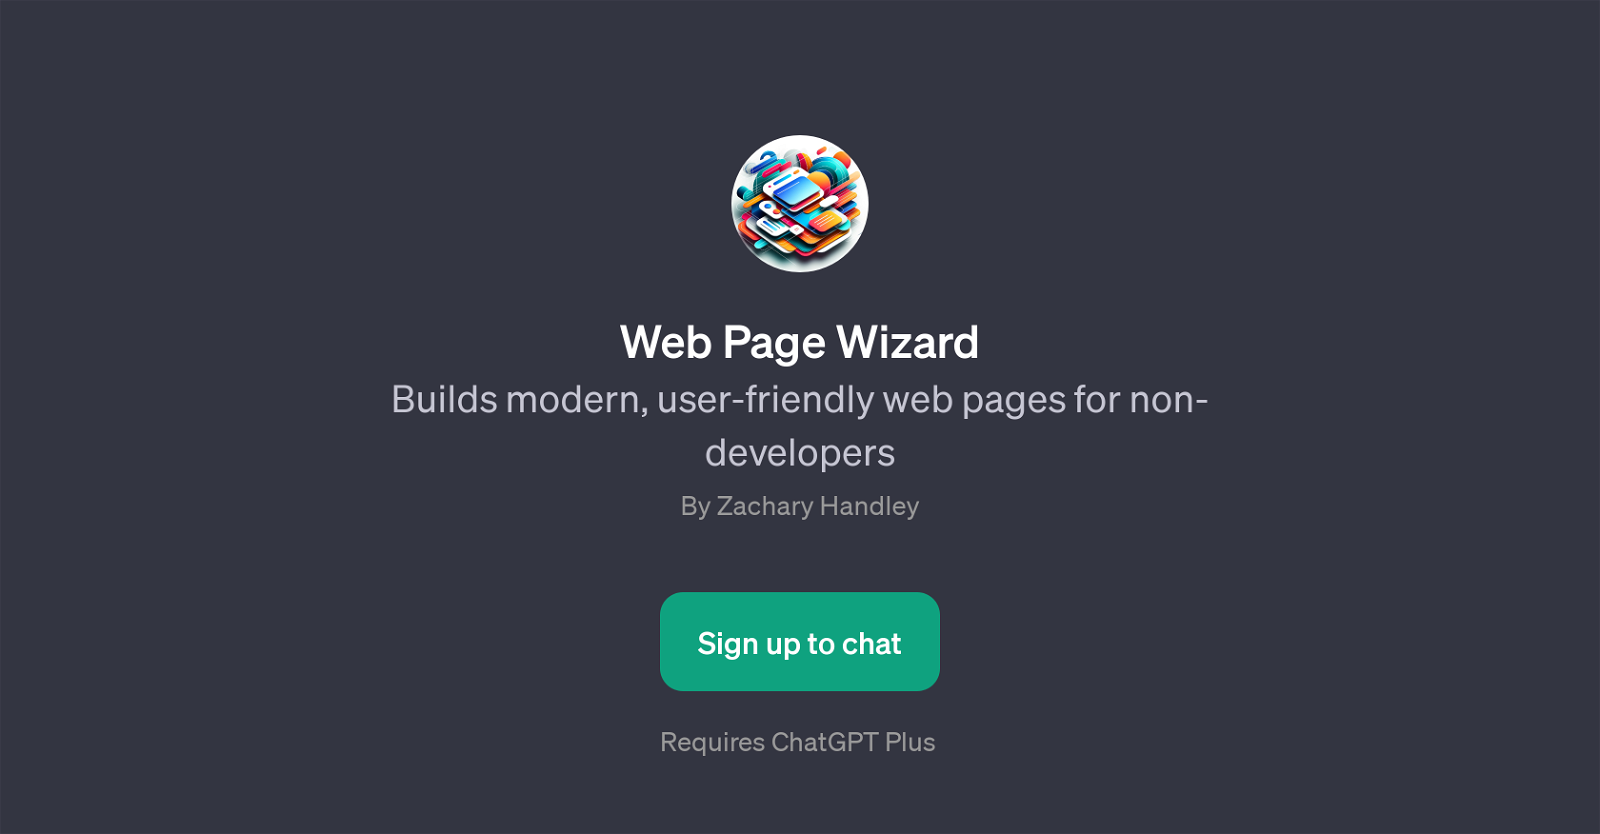 Web Page Wizard website